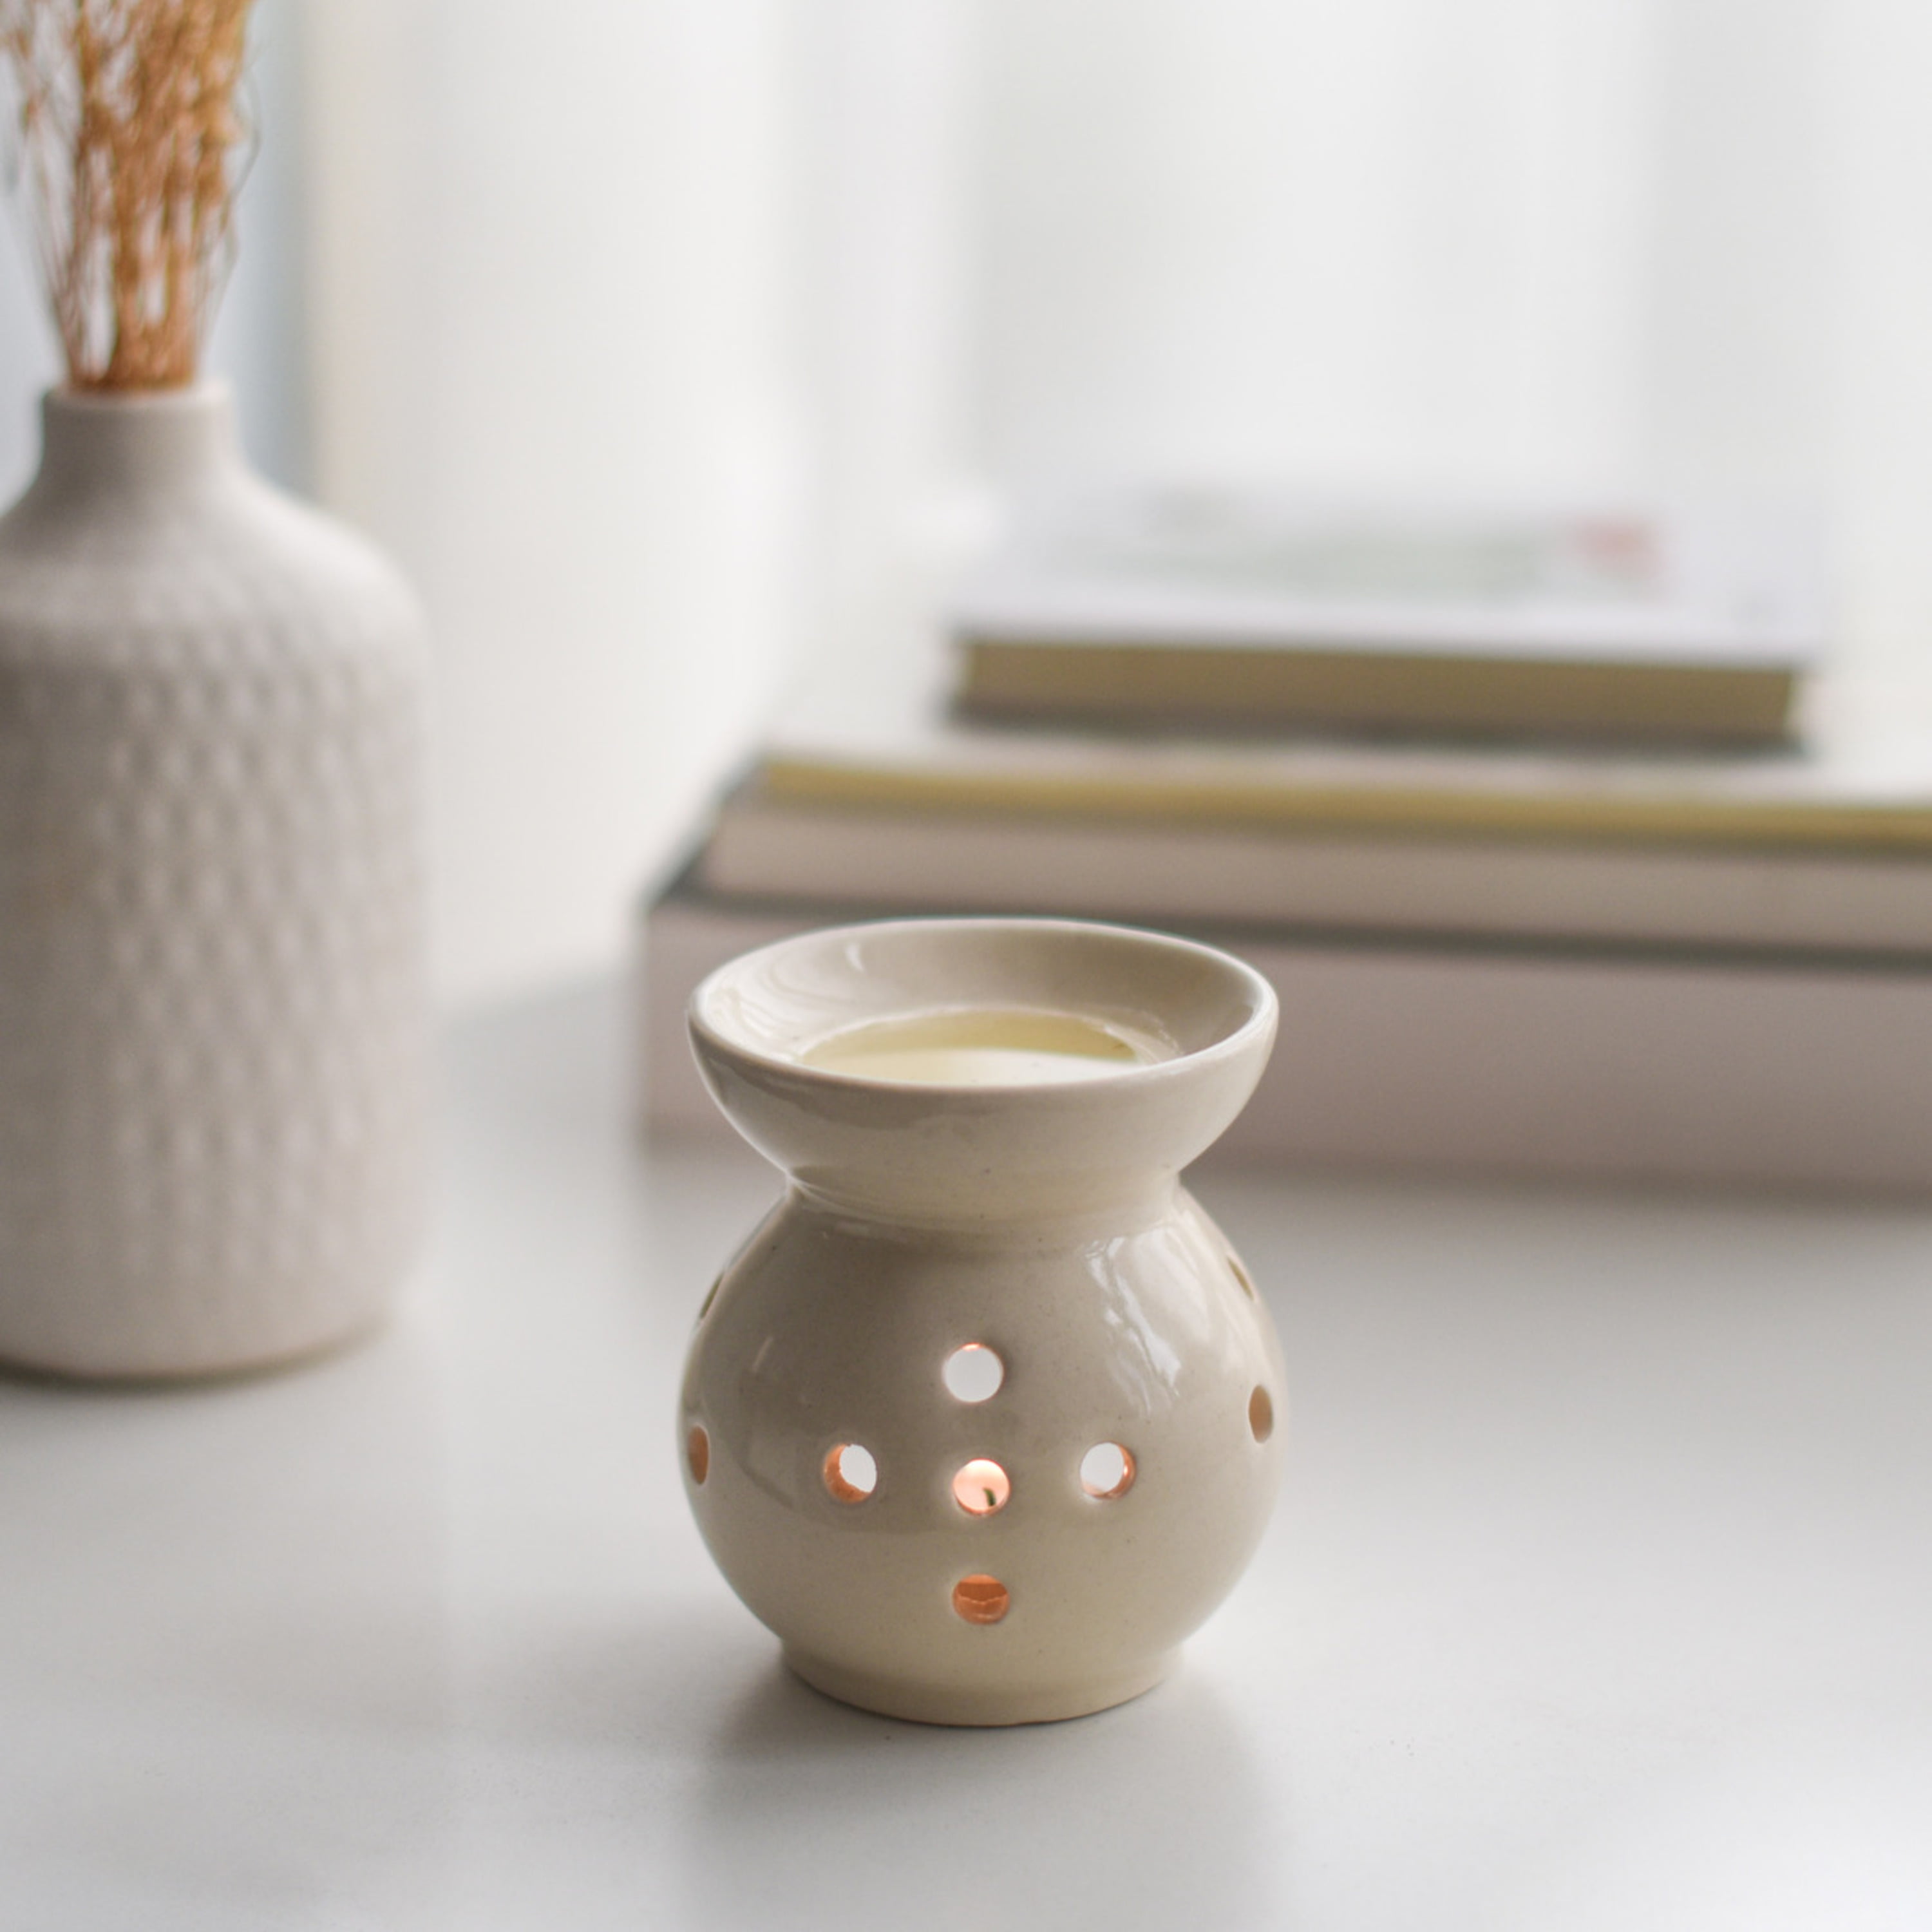 Ceramic Warmer – Tily Tea